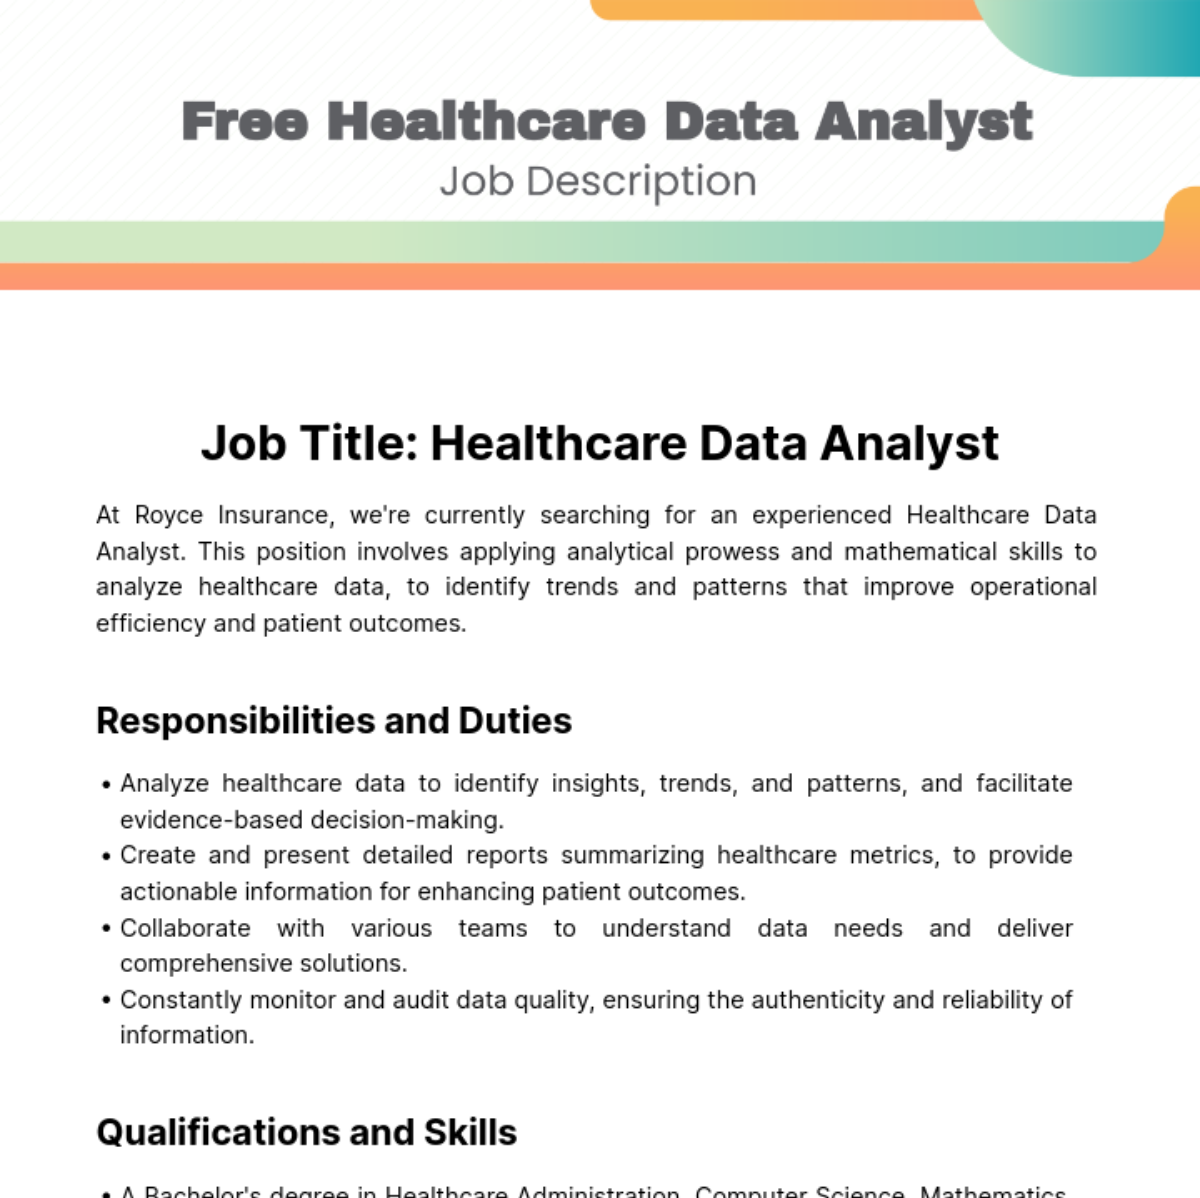 Free Healthcare Data Analyst Job Description Template